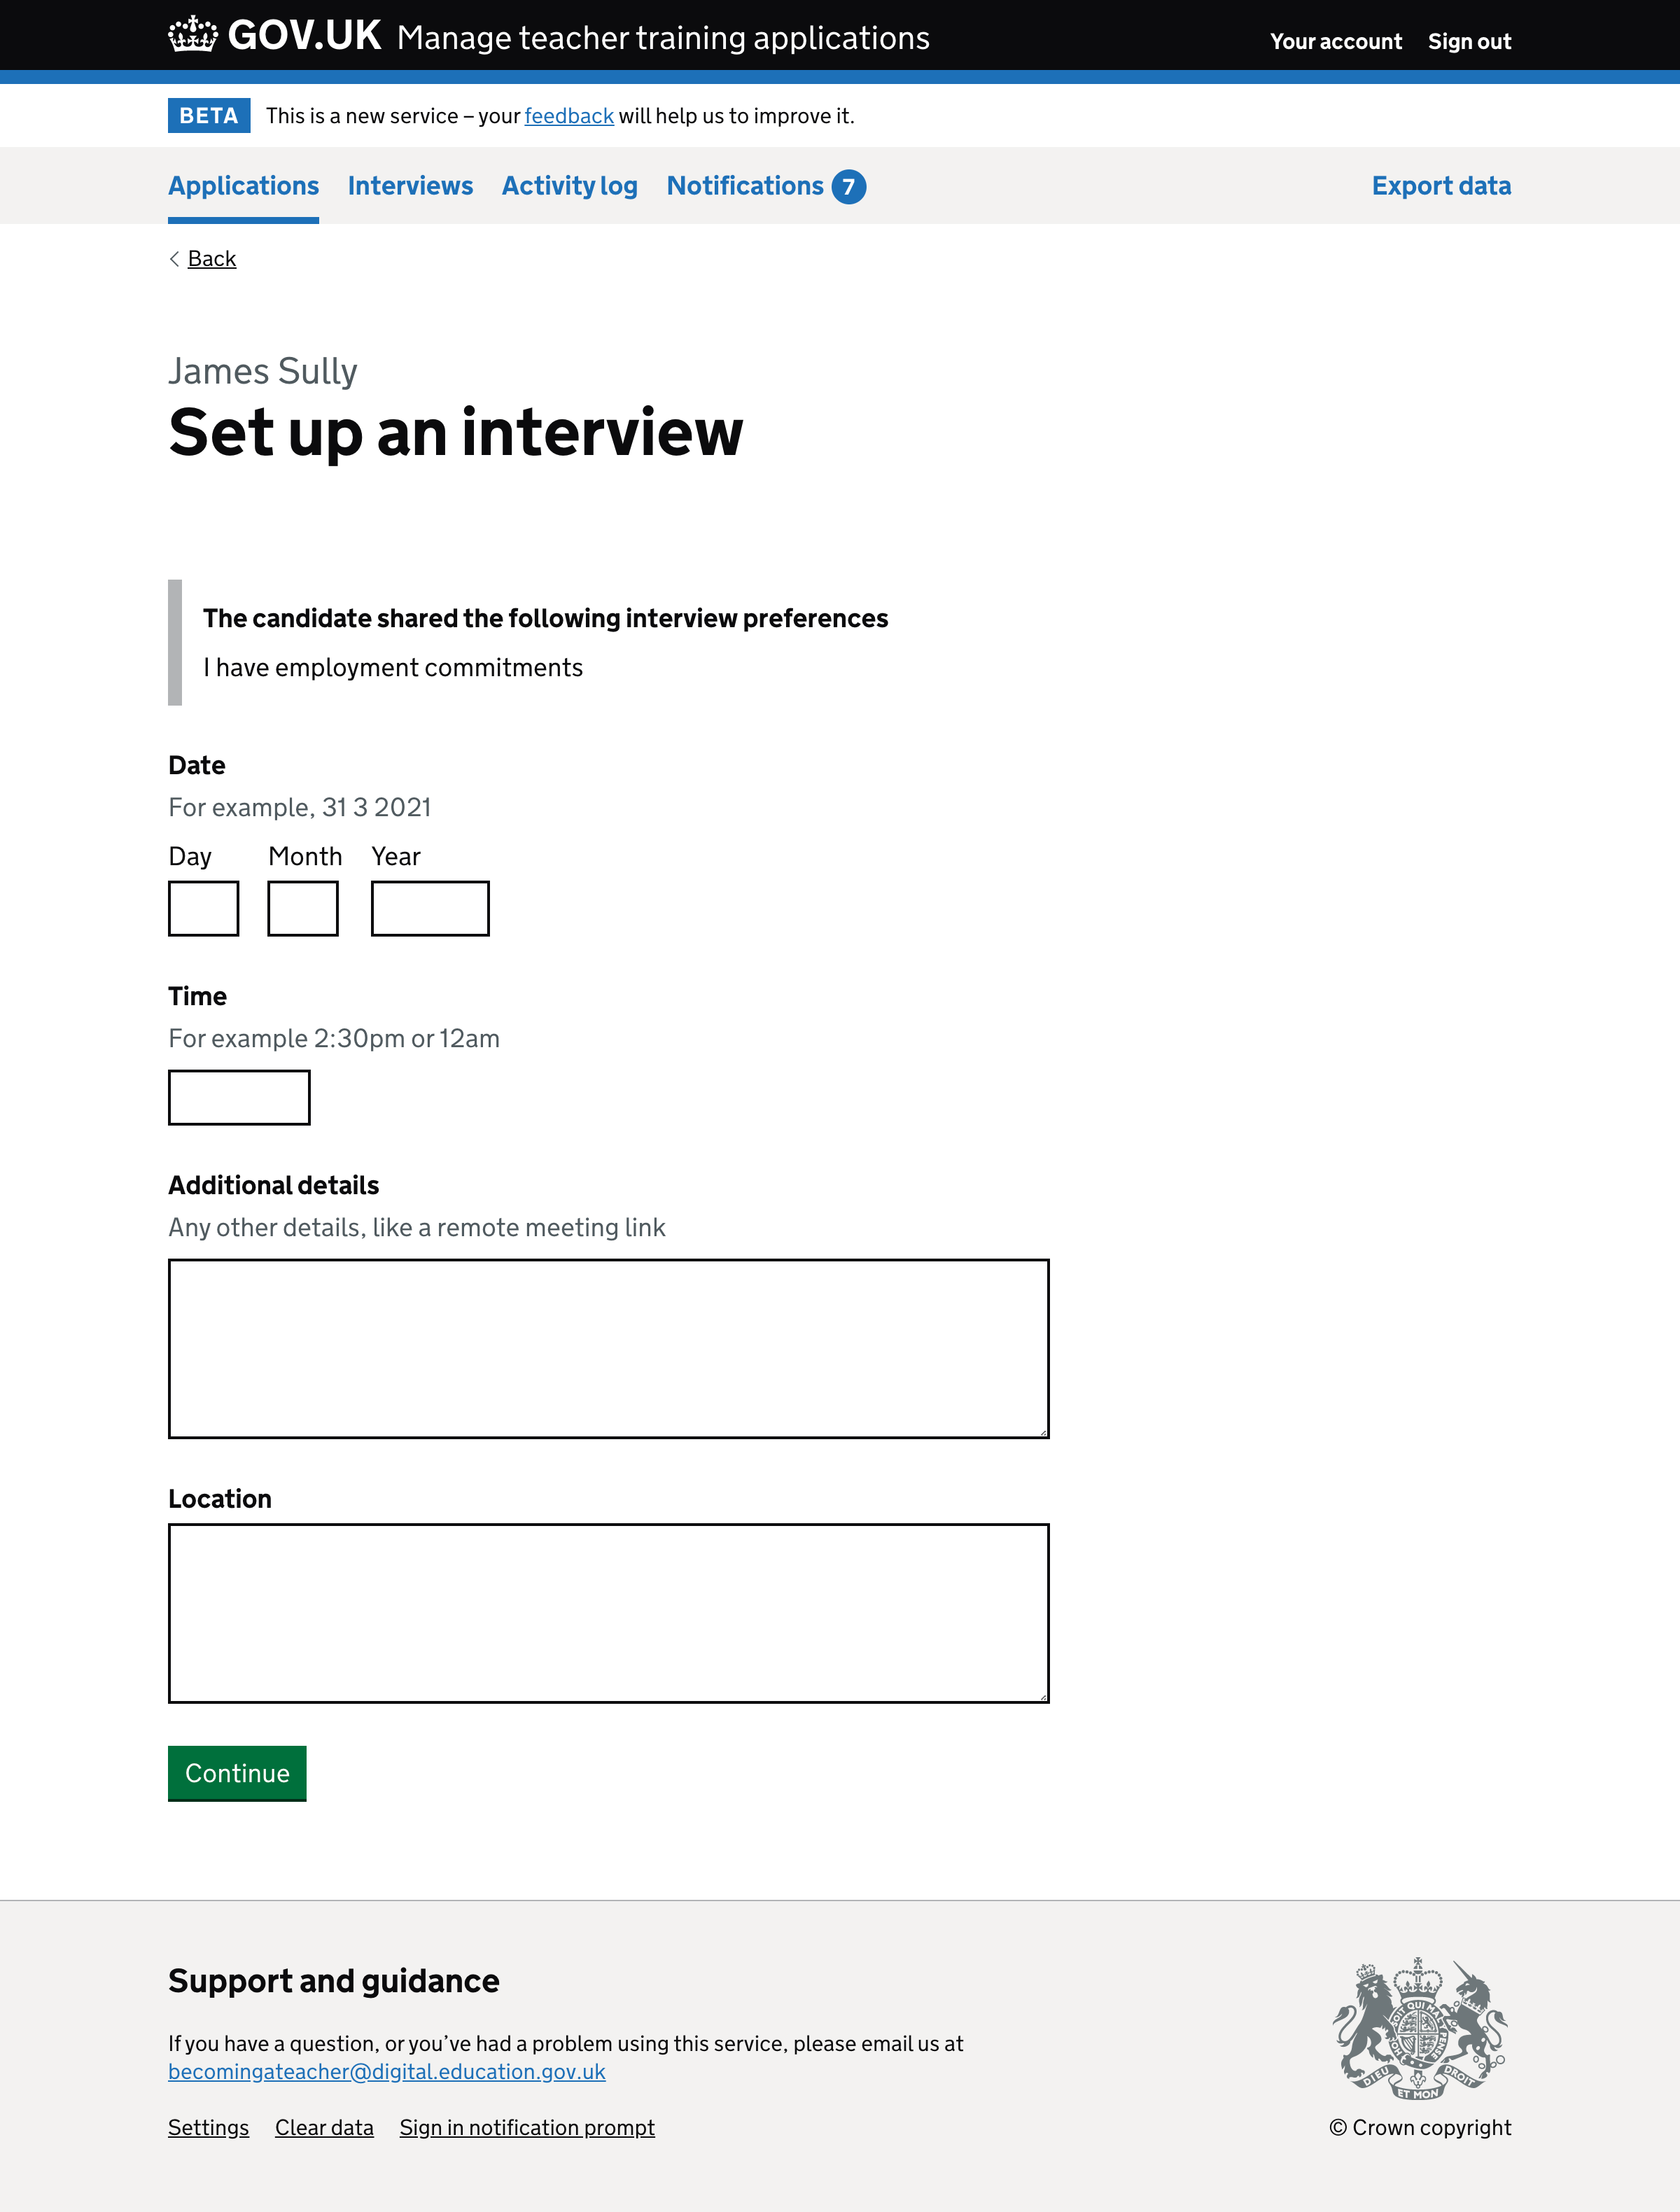 Screenshot of ‘Set up an interview‘ page.